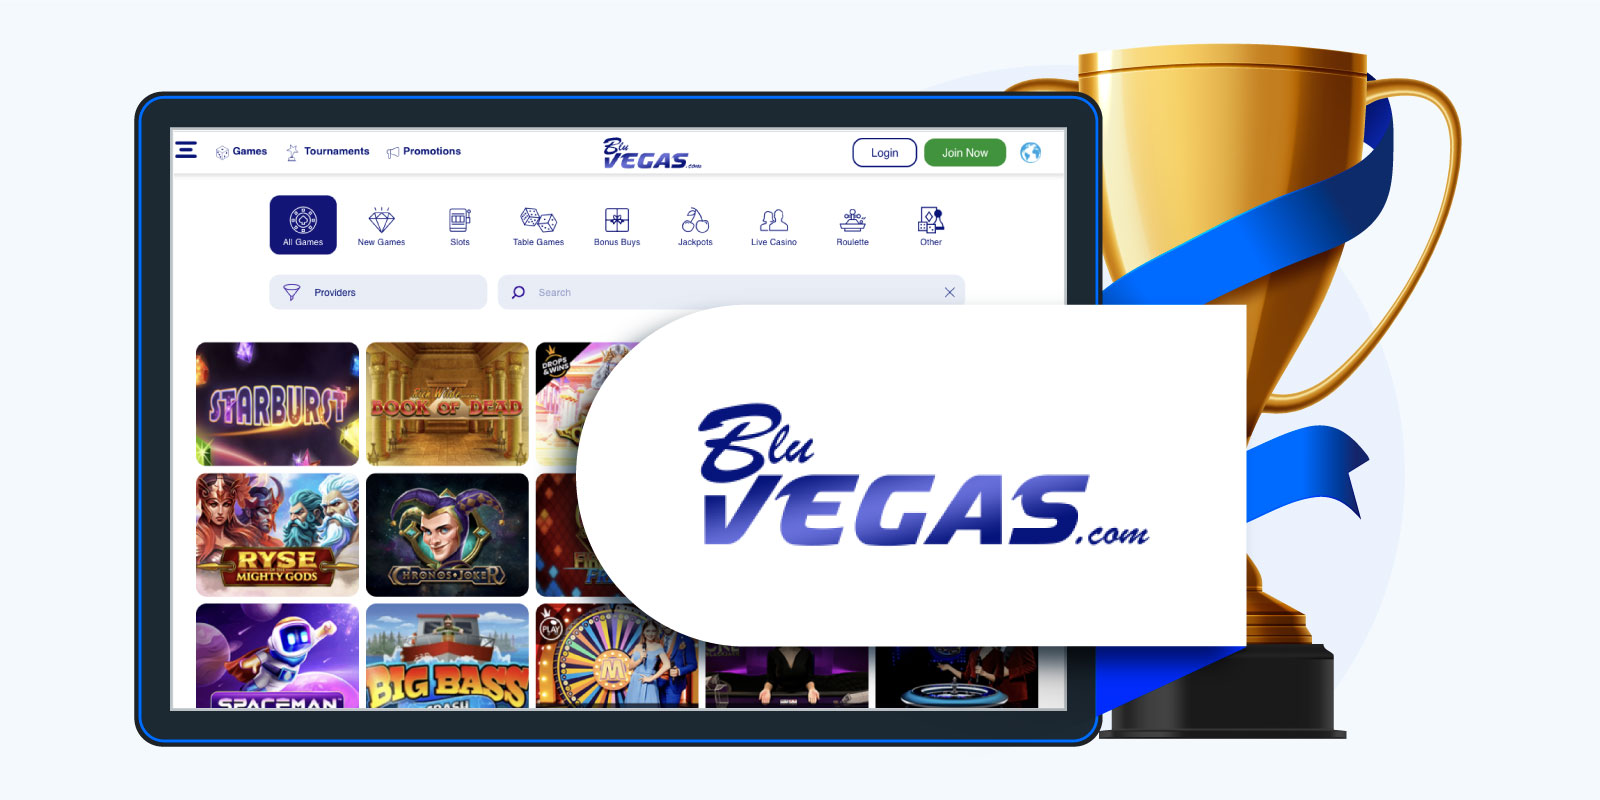 #1. Best Casino with 200% Bonus: Blu Vegas